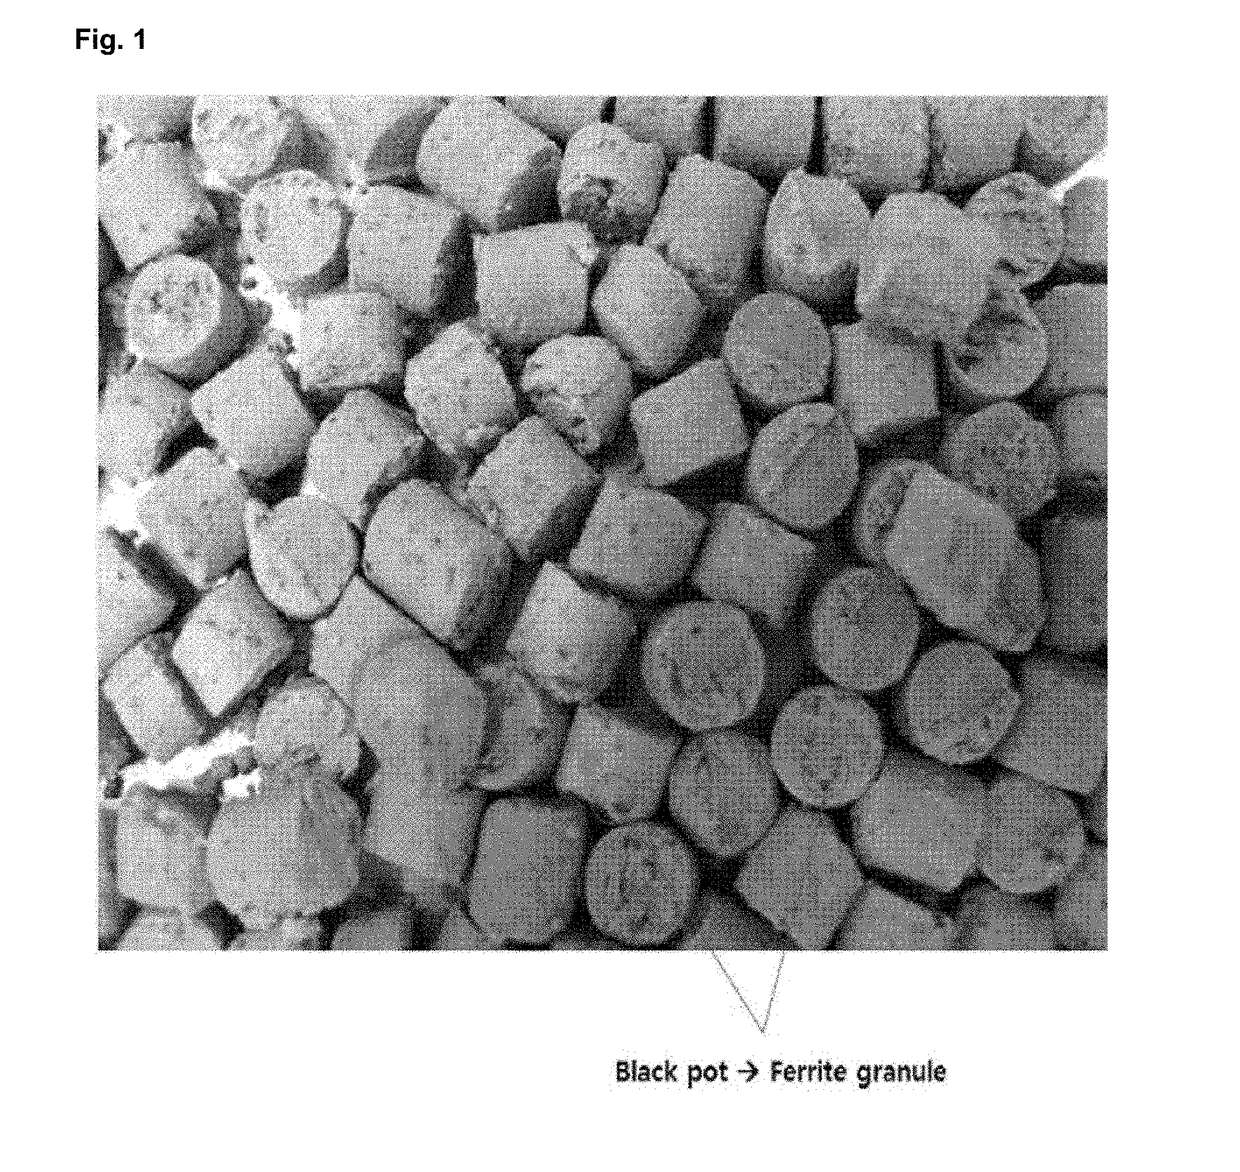 Ferrite-based catalyst composite, method of preparing the same, and method of preparing butadiene using the same